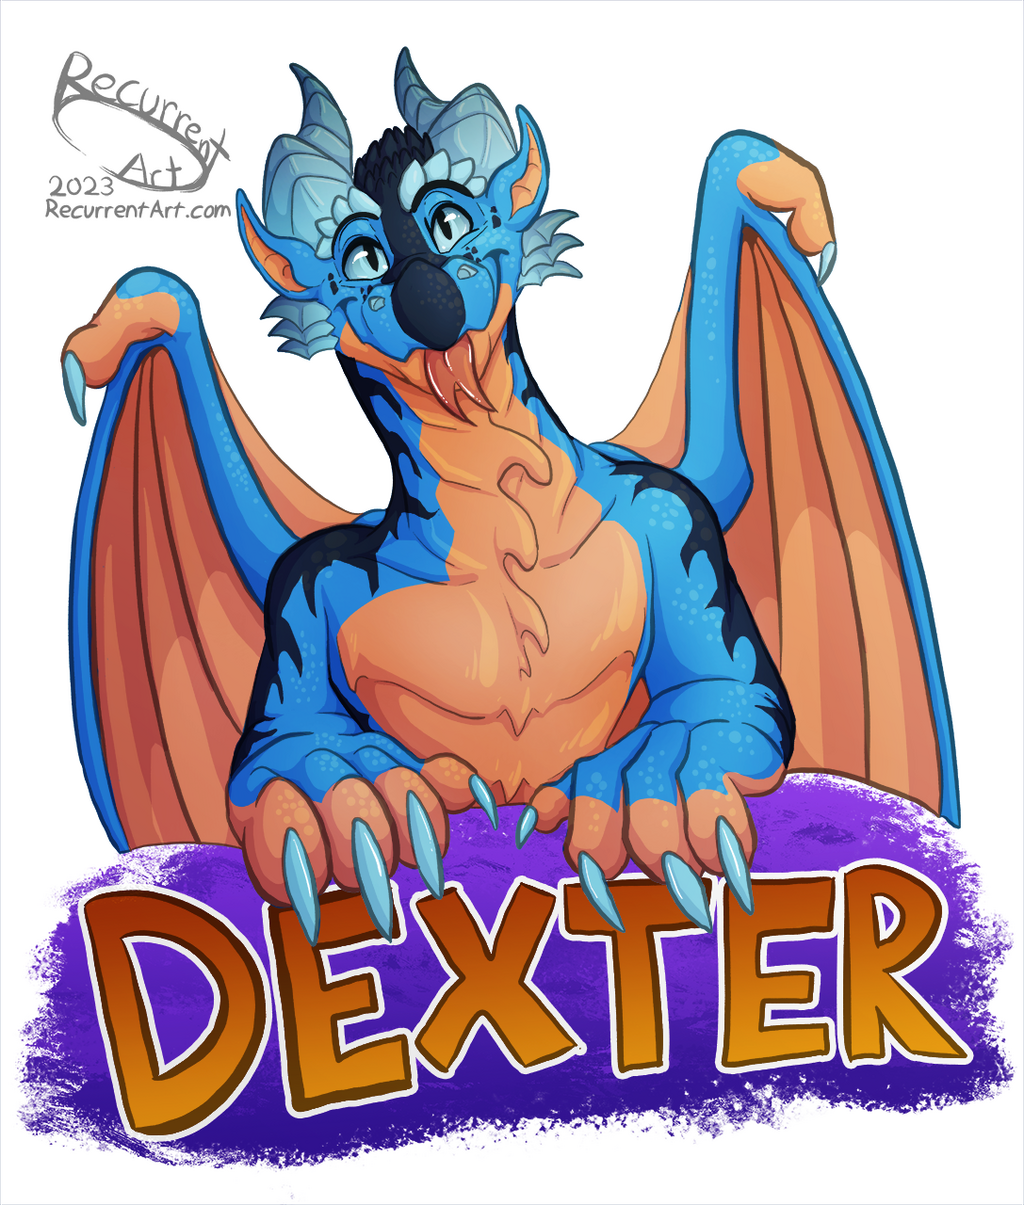 Most recent image: [c] Dexter Badge